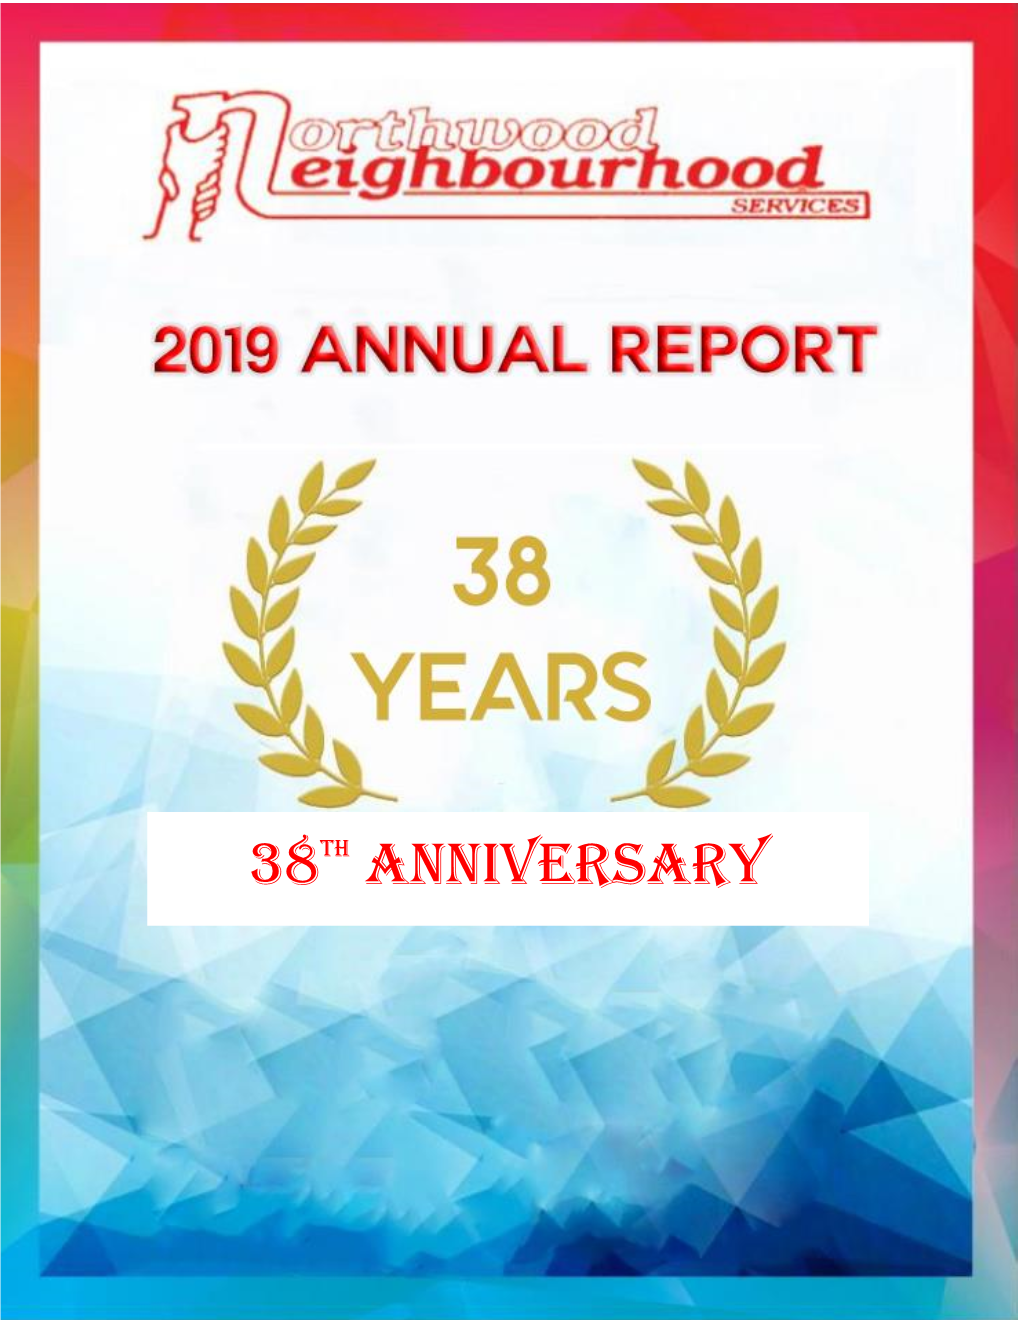 38Th Anniversary of Northwood Neighbourhood Services